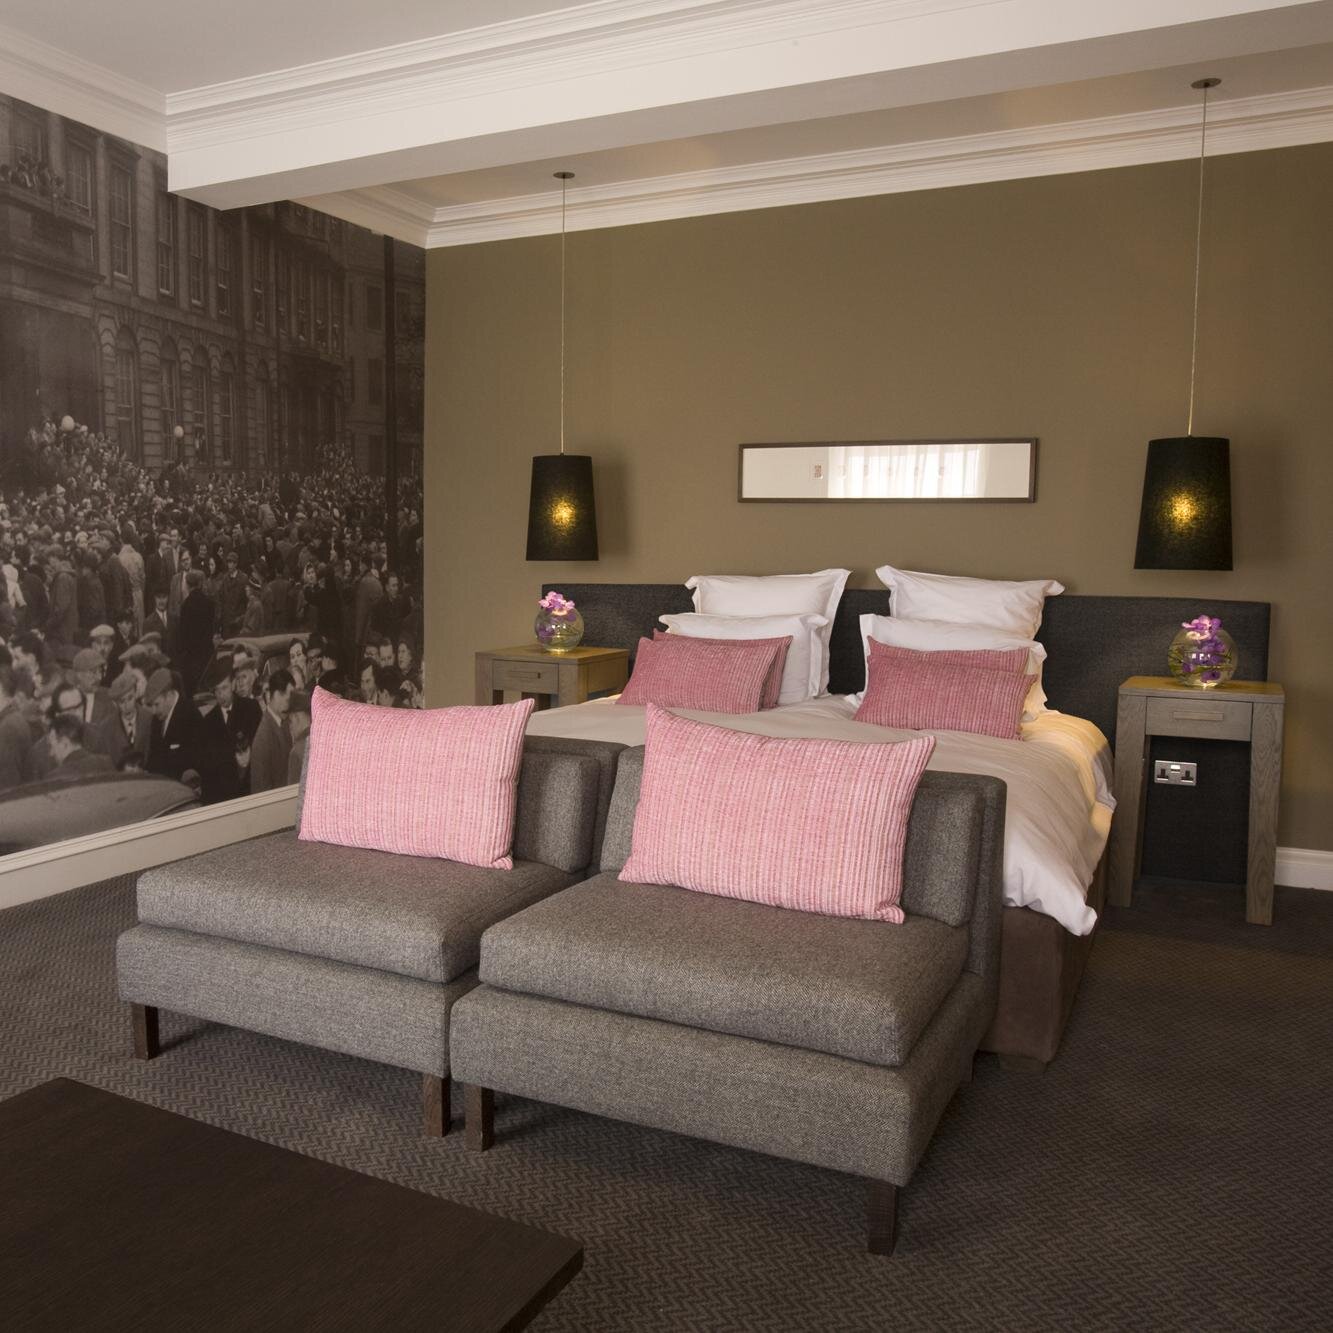 #luxuryhotels in #edinburgh and #glasgow - @BonhamHotel and @BlythswoodSQ. Tweets by Natalie Allera. http://t.co/GqdgMG2SaV